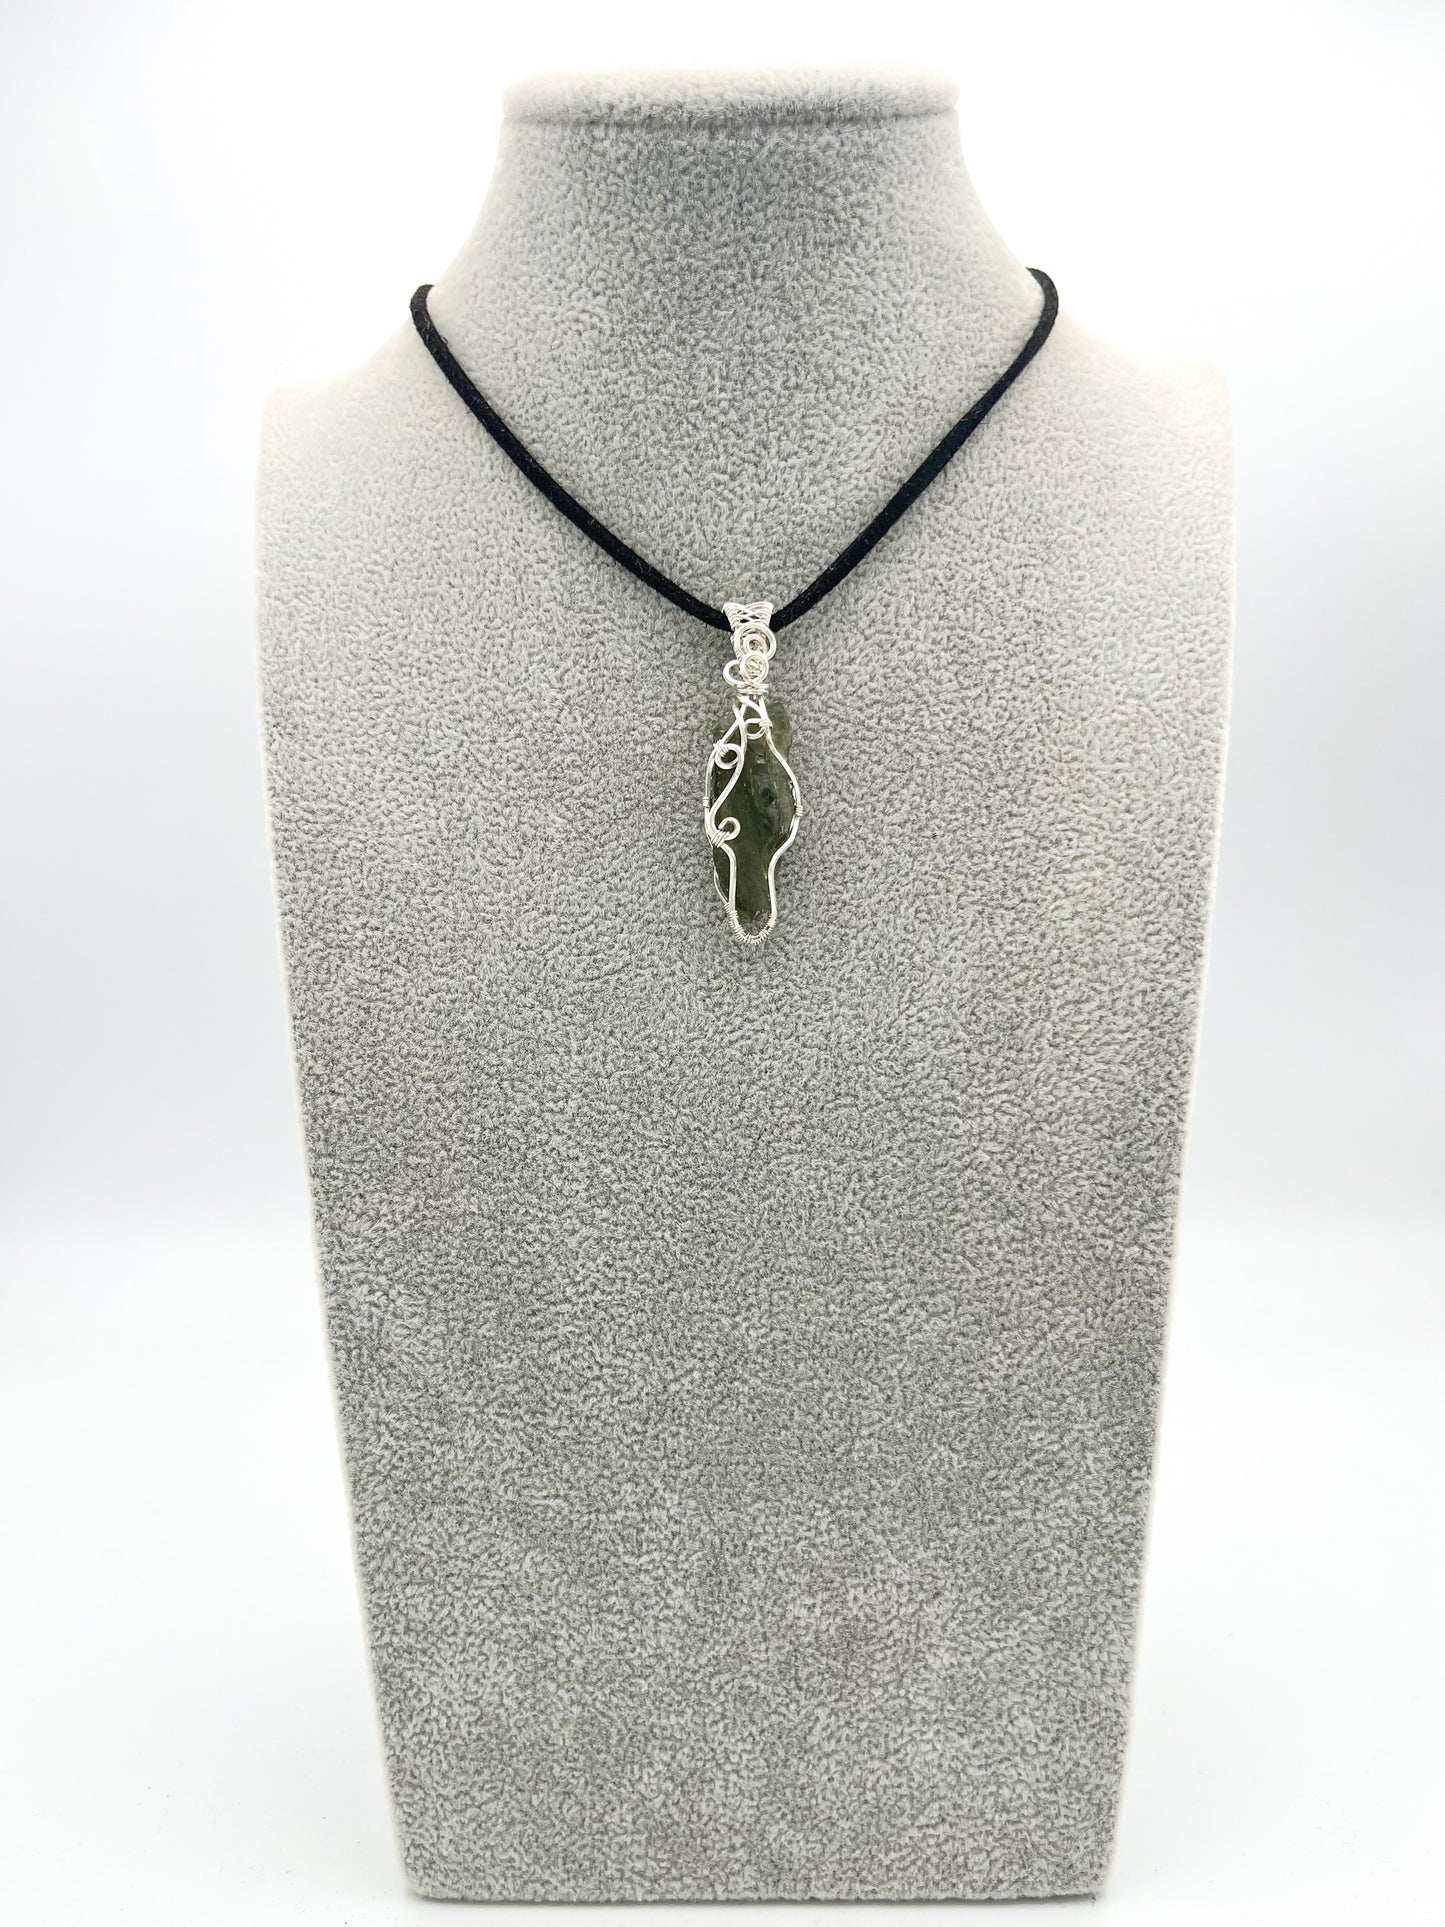 genuine moldavite silver pendant, wire wrapped jewelry, handmade gift